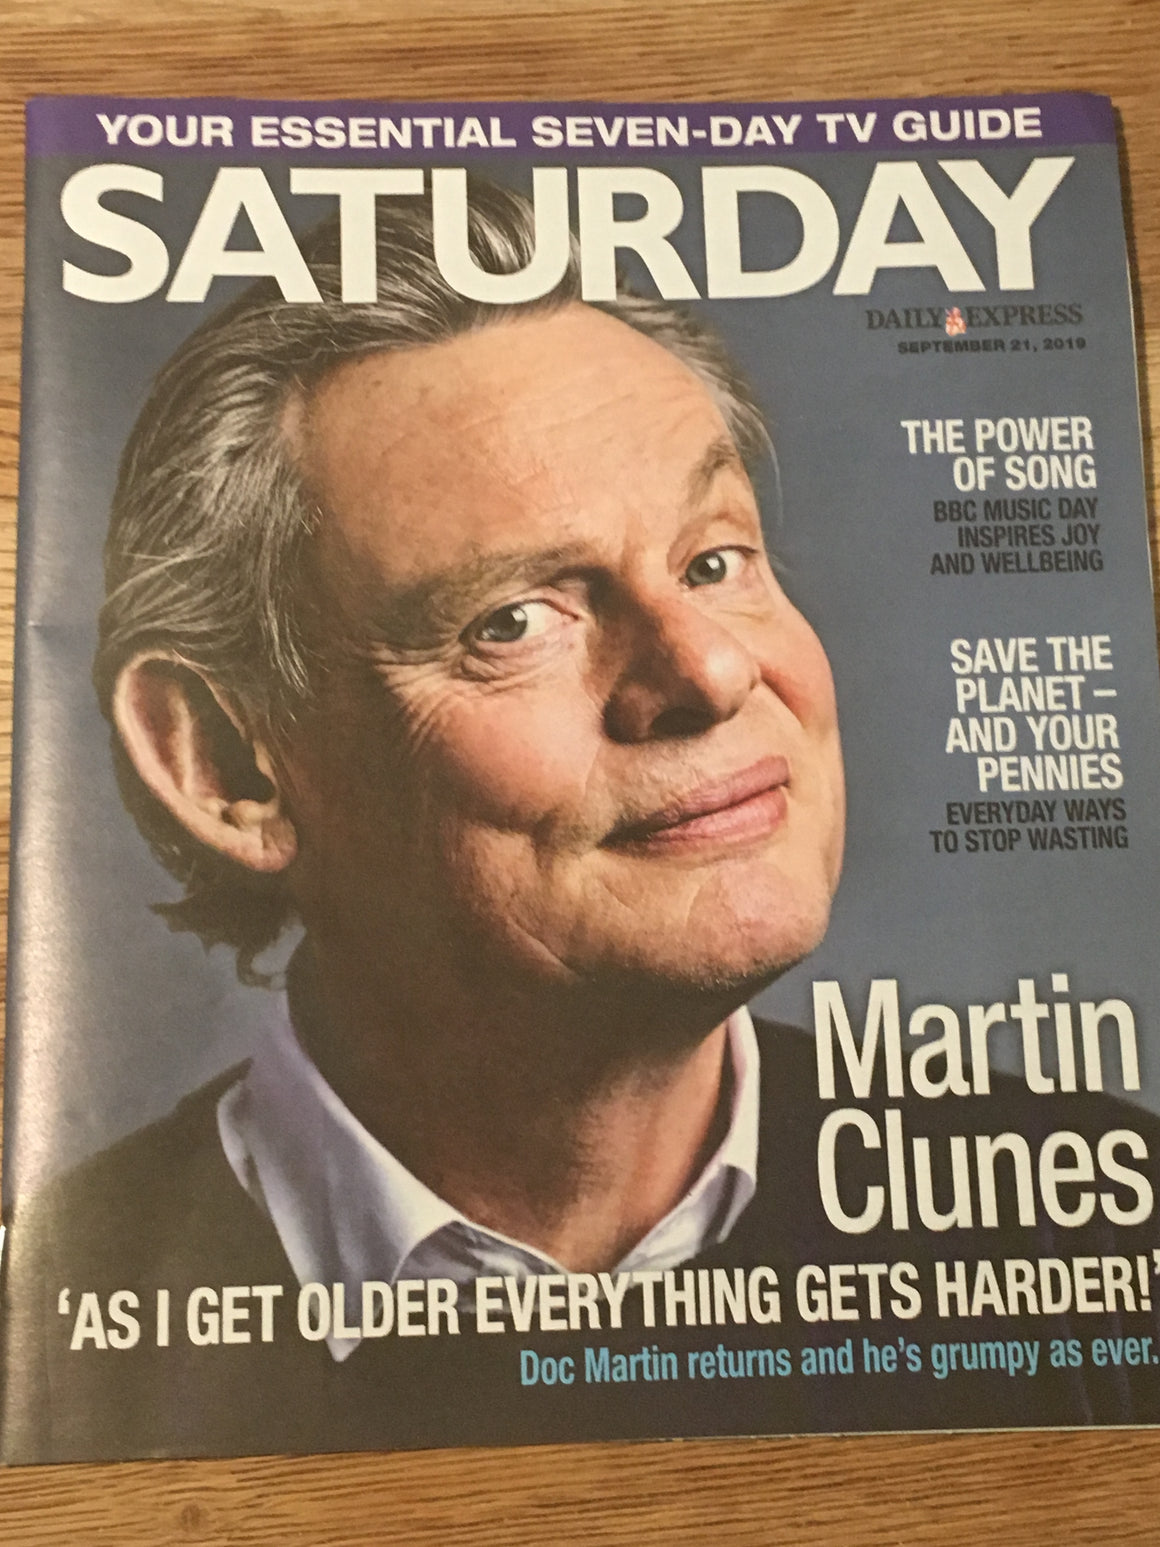 UK SATURDAY Magazine September 2019: MARTIN CLUNES COVER STORY